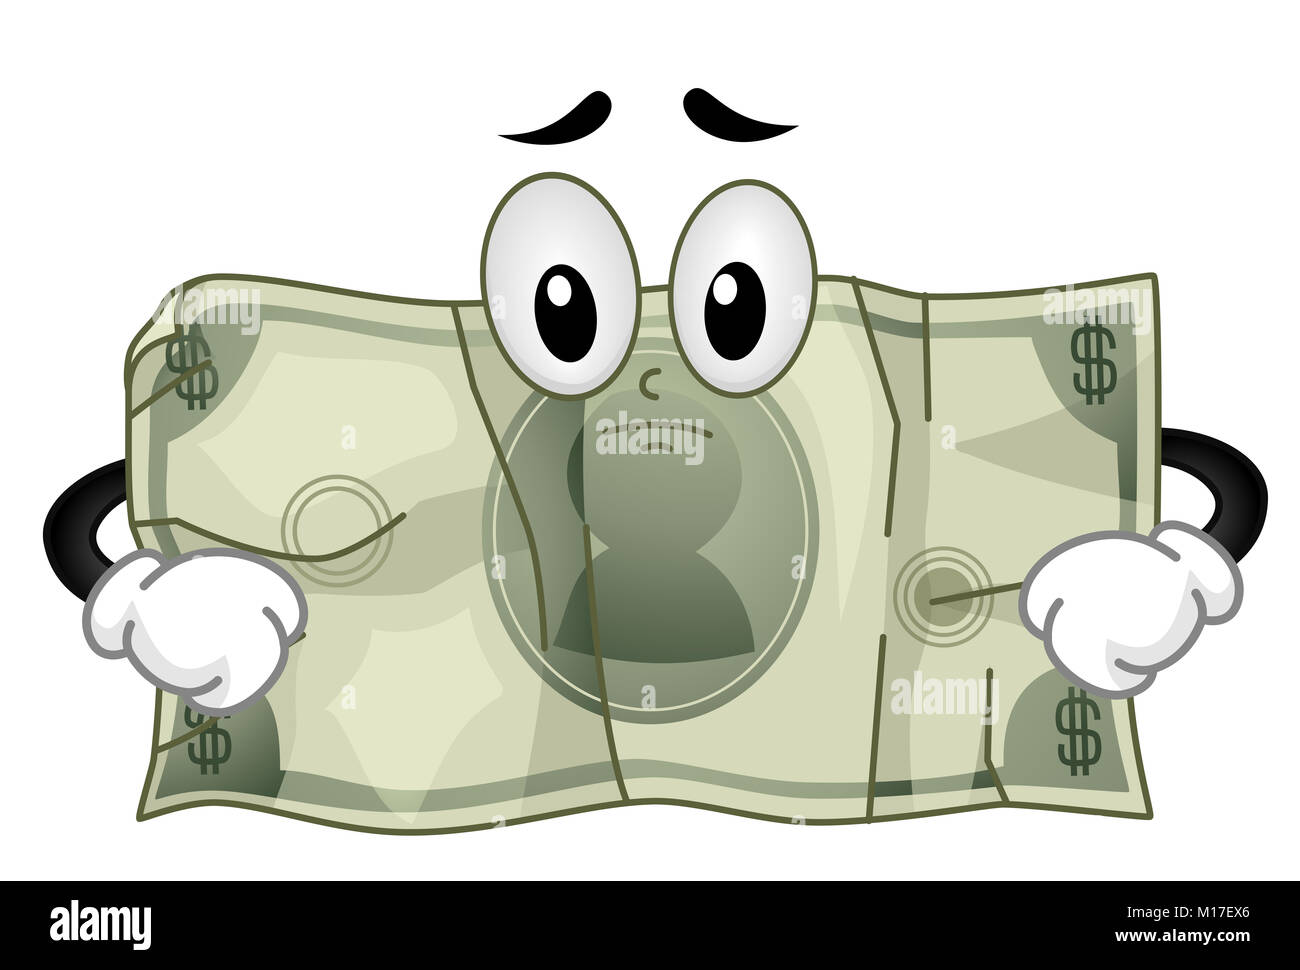 Illustration of a Sad and Crumpled Money Bill Mascot Stock Photo